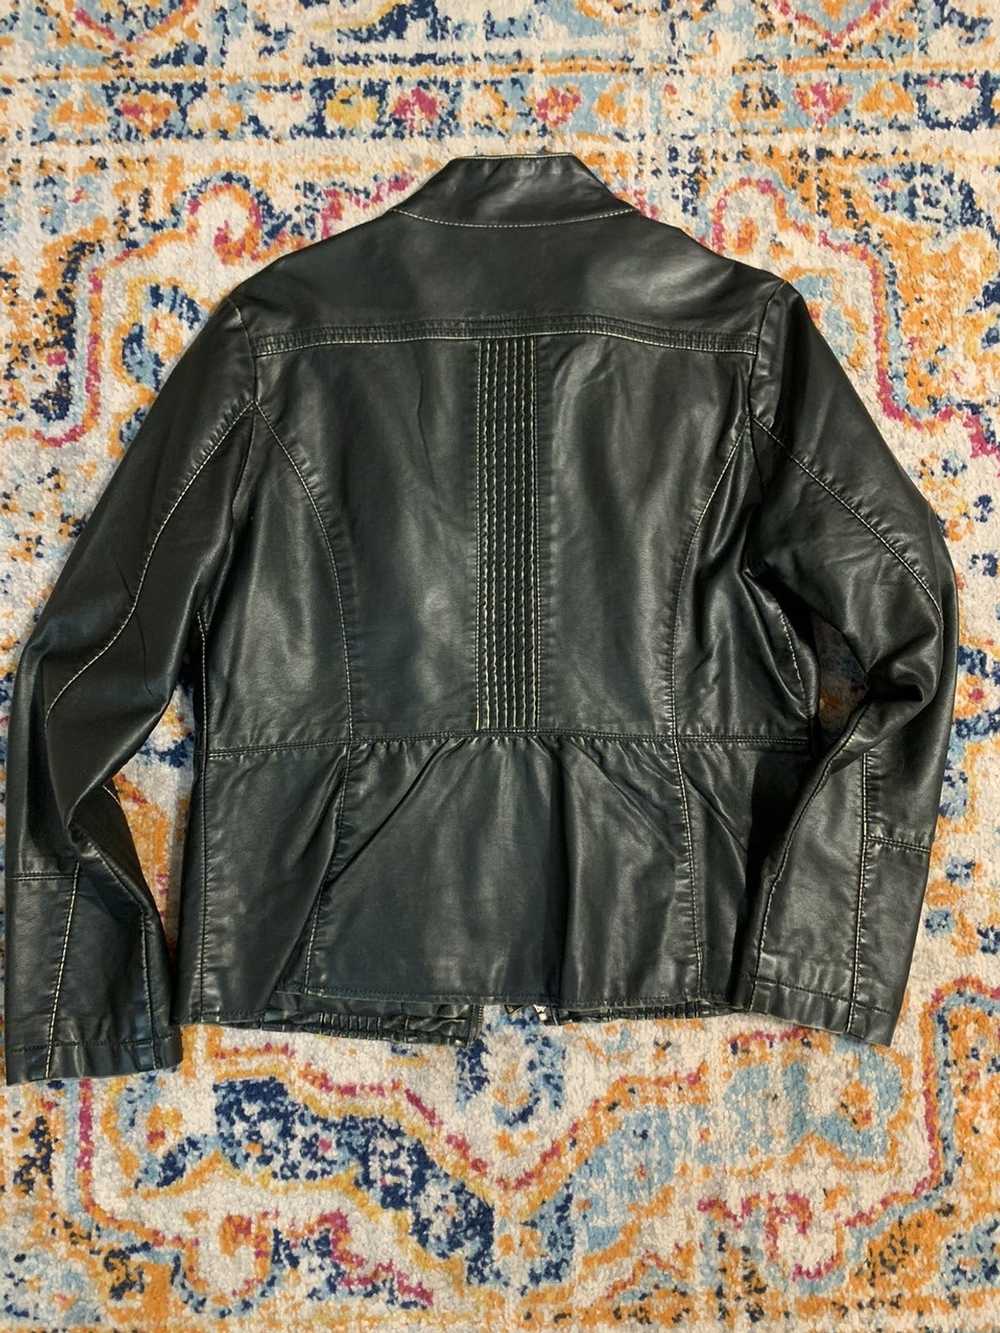 Vintage Big chill vintage faux leather jacket - image 2